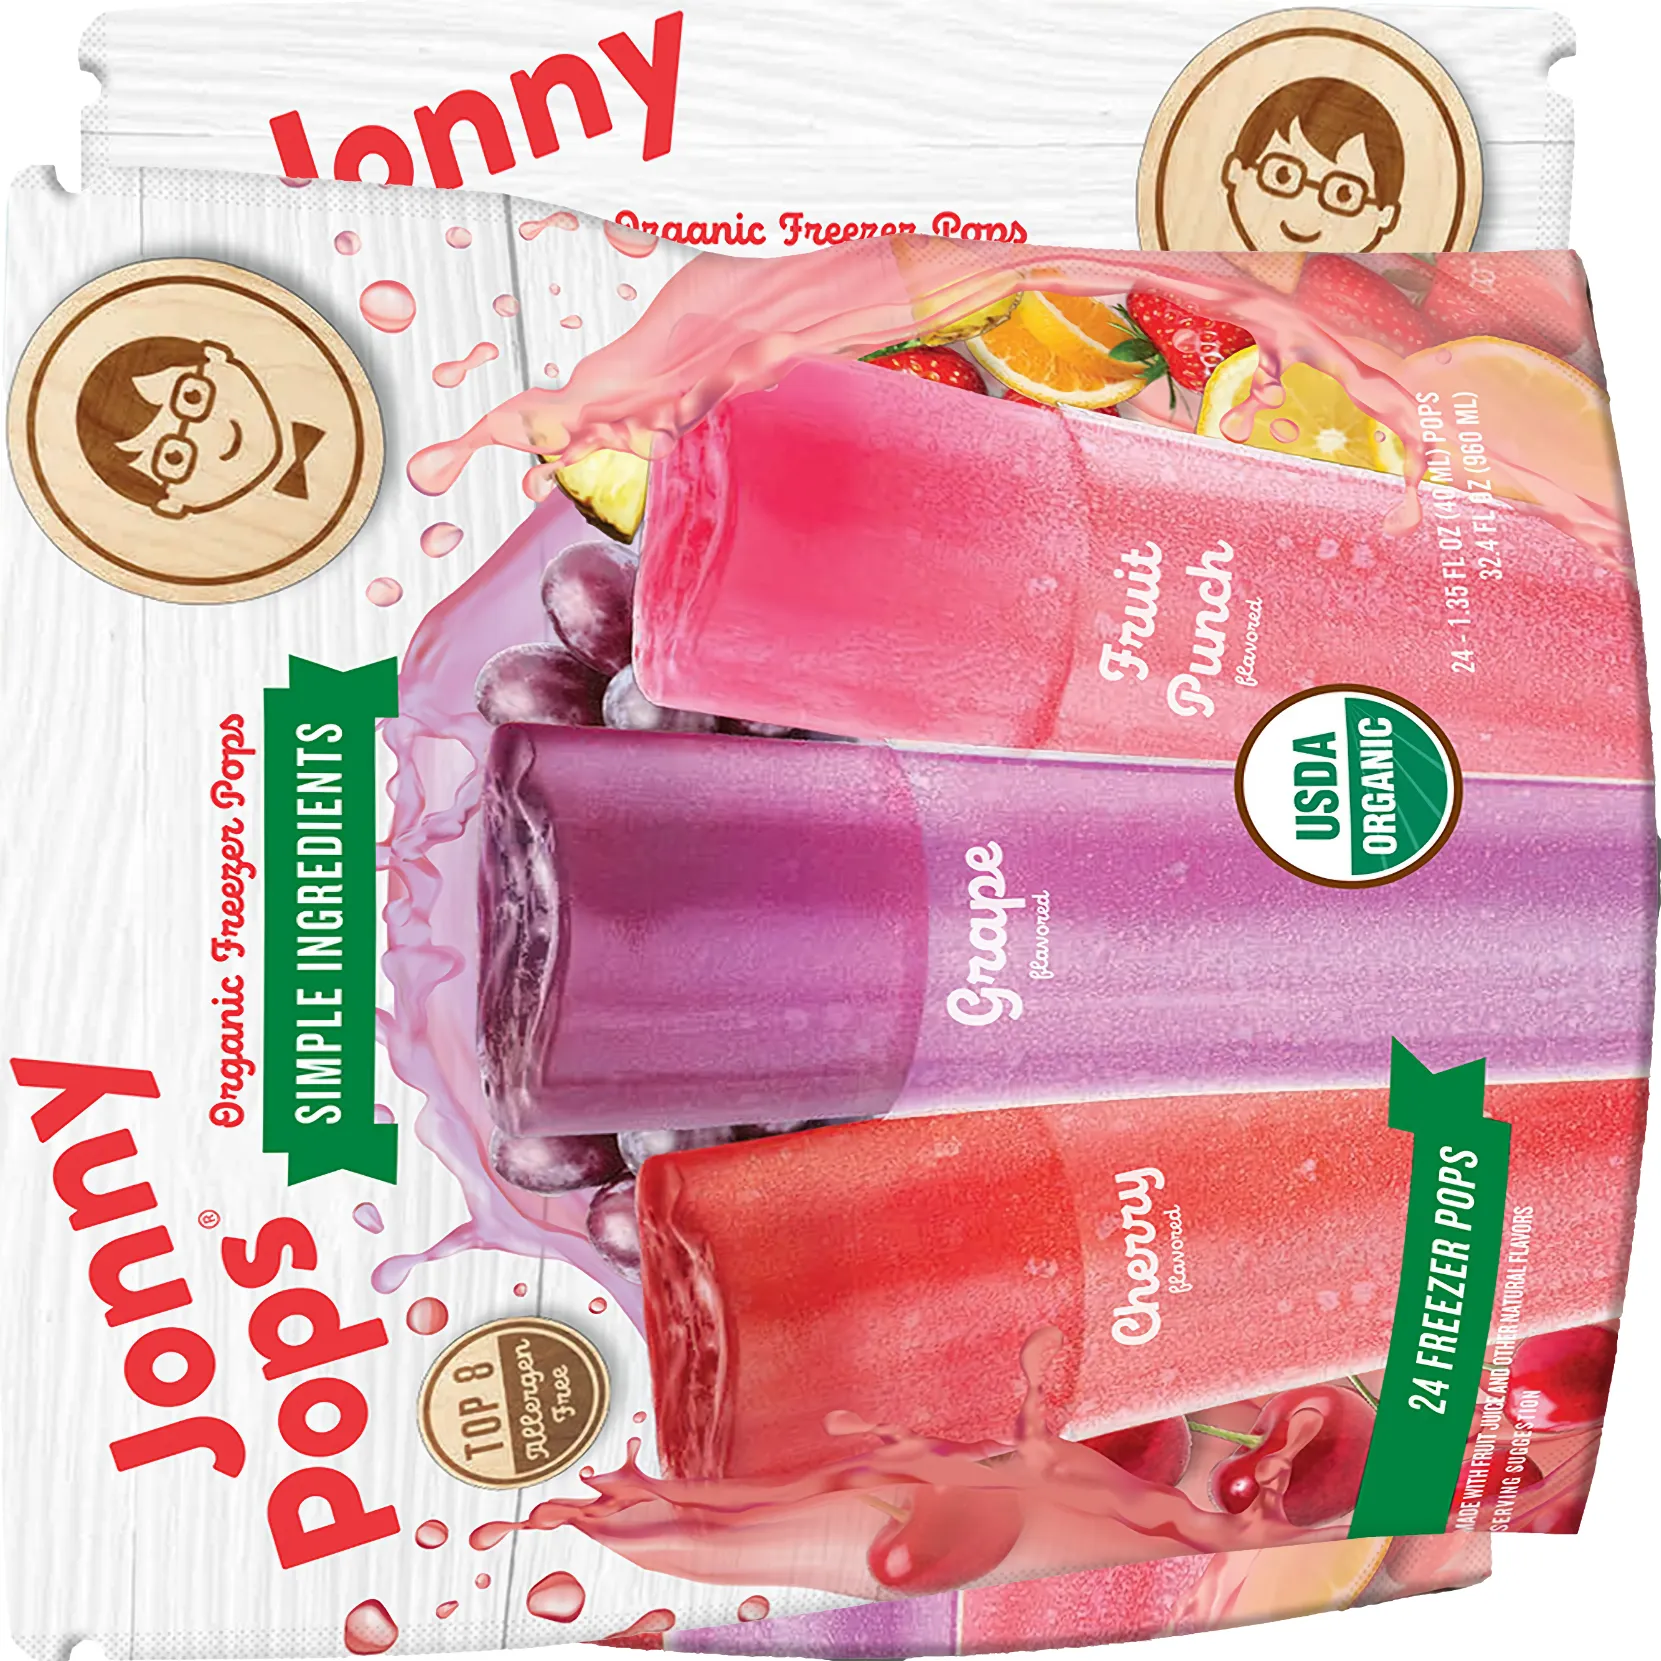 Free Jonny Pops Organic Freezer Pops